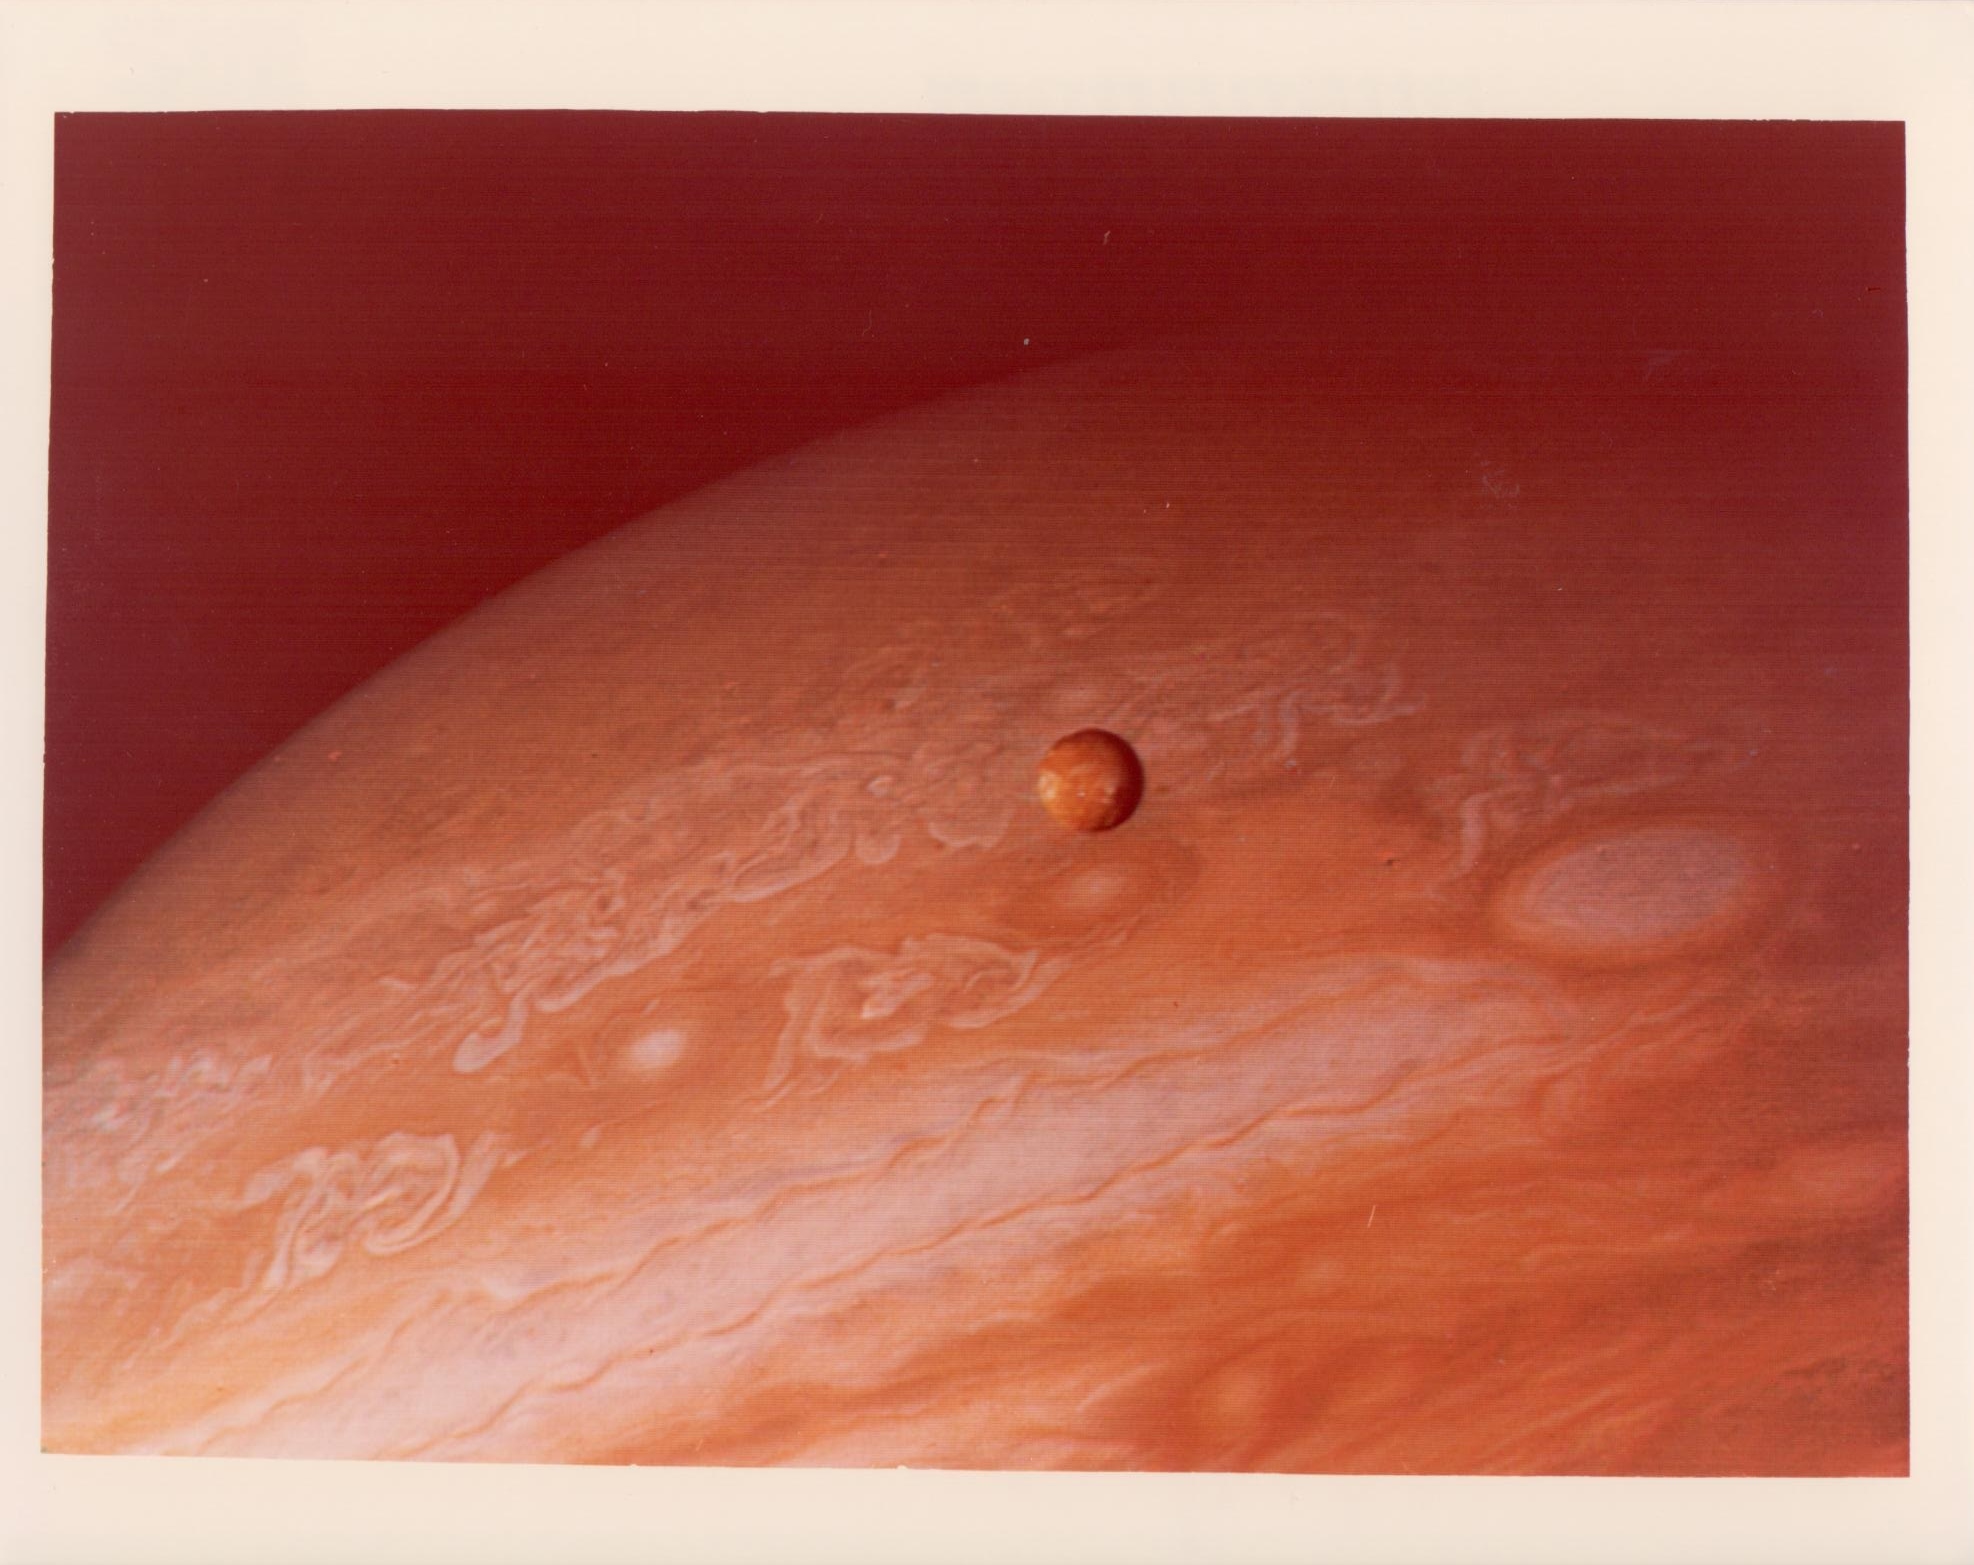 Jupiter and its satellite Io, Voyager 2, June 1979